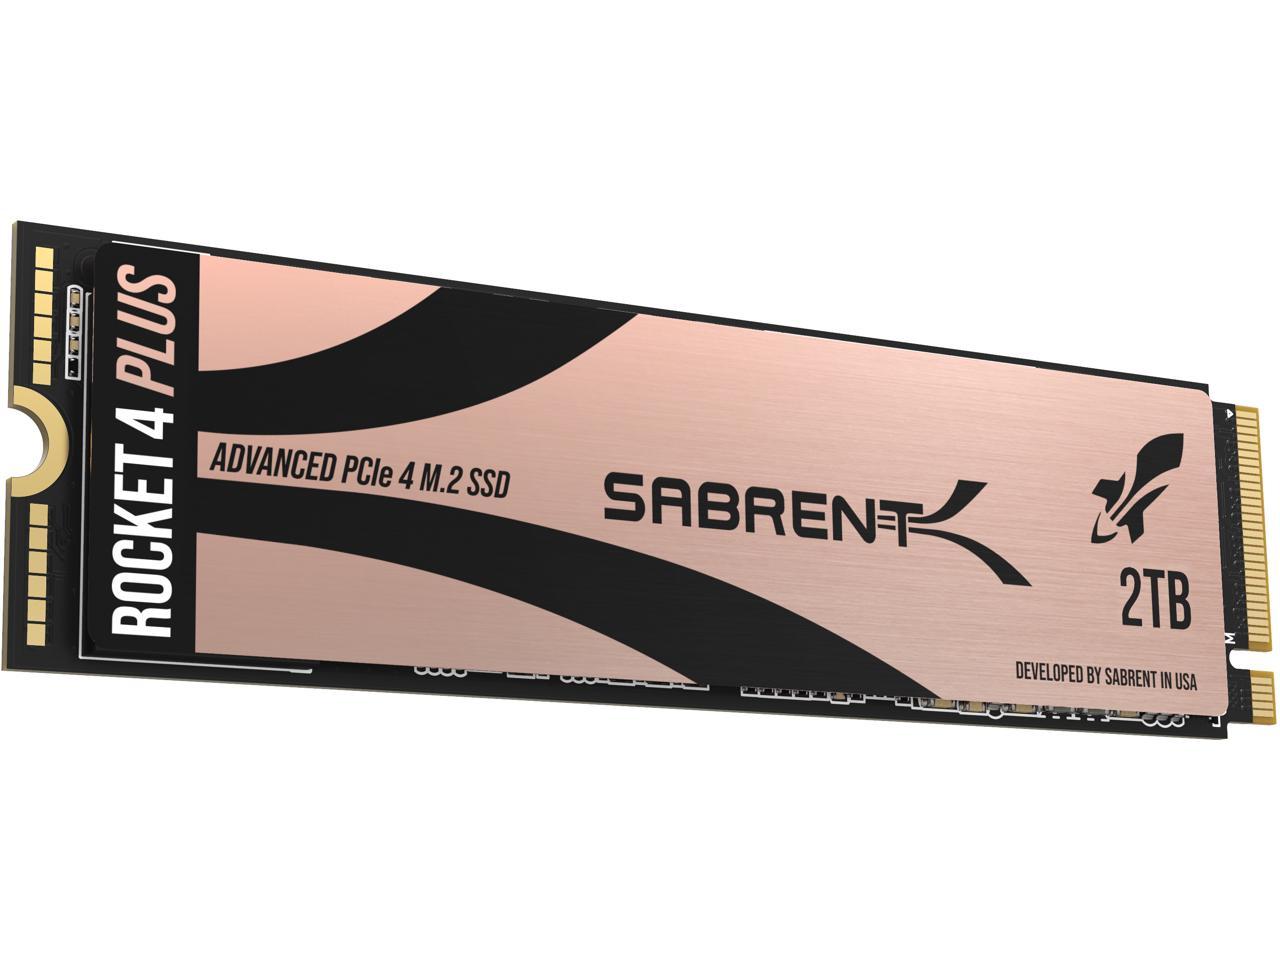 2TB Sabrent Rocket 4 Plus NVMe 4.0 SSD $255